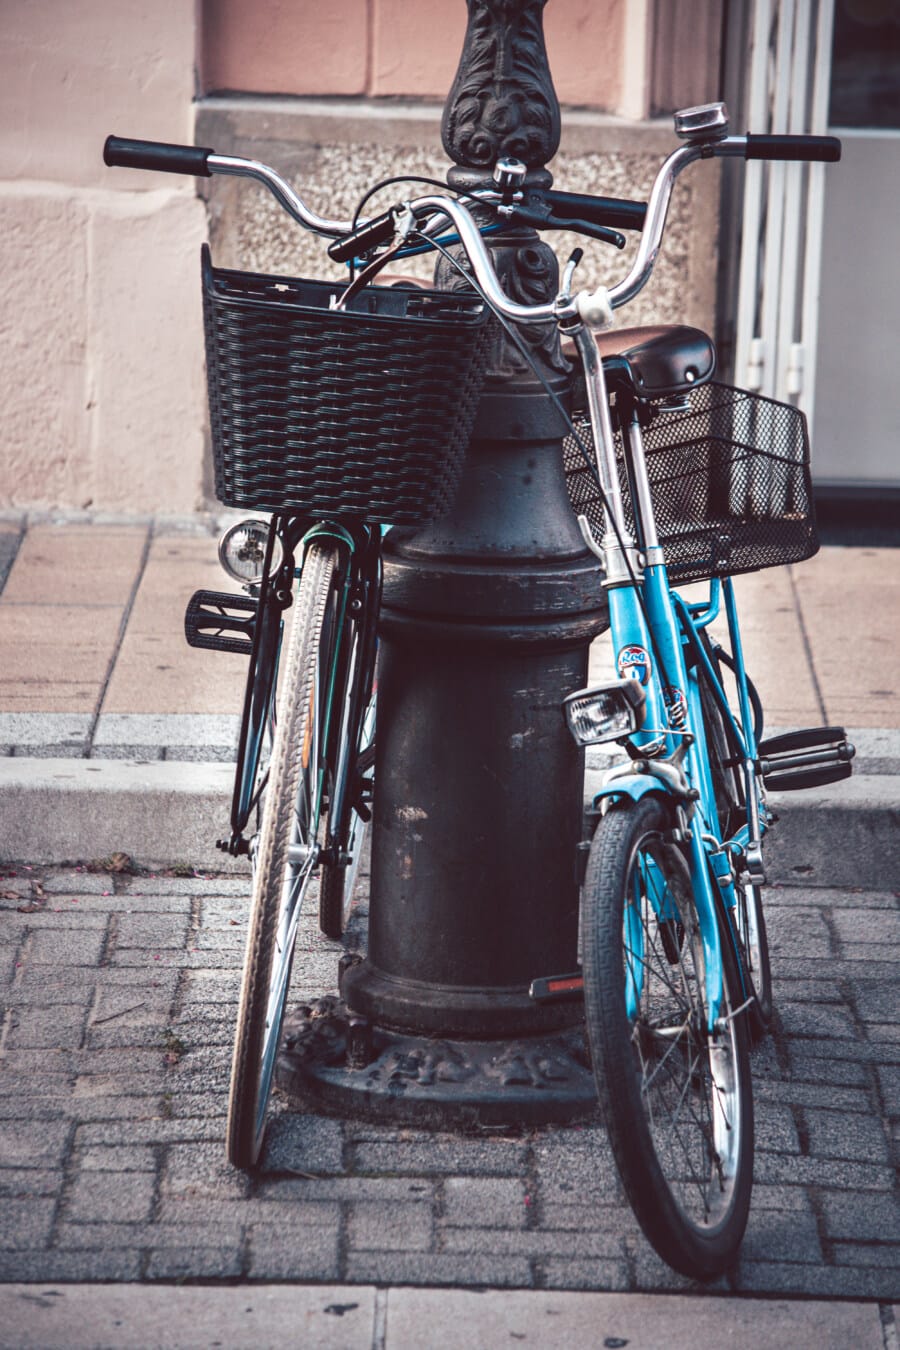 bicicleta, estilo antiguo, cesta de mimbre, Francia, rueda de manejo, nostalgia, pavimento, calle, estacionamiento, rueda